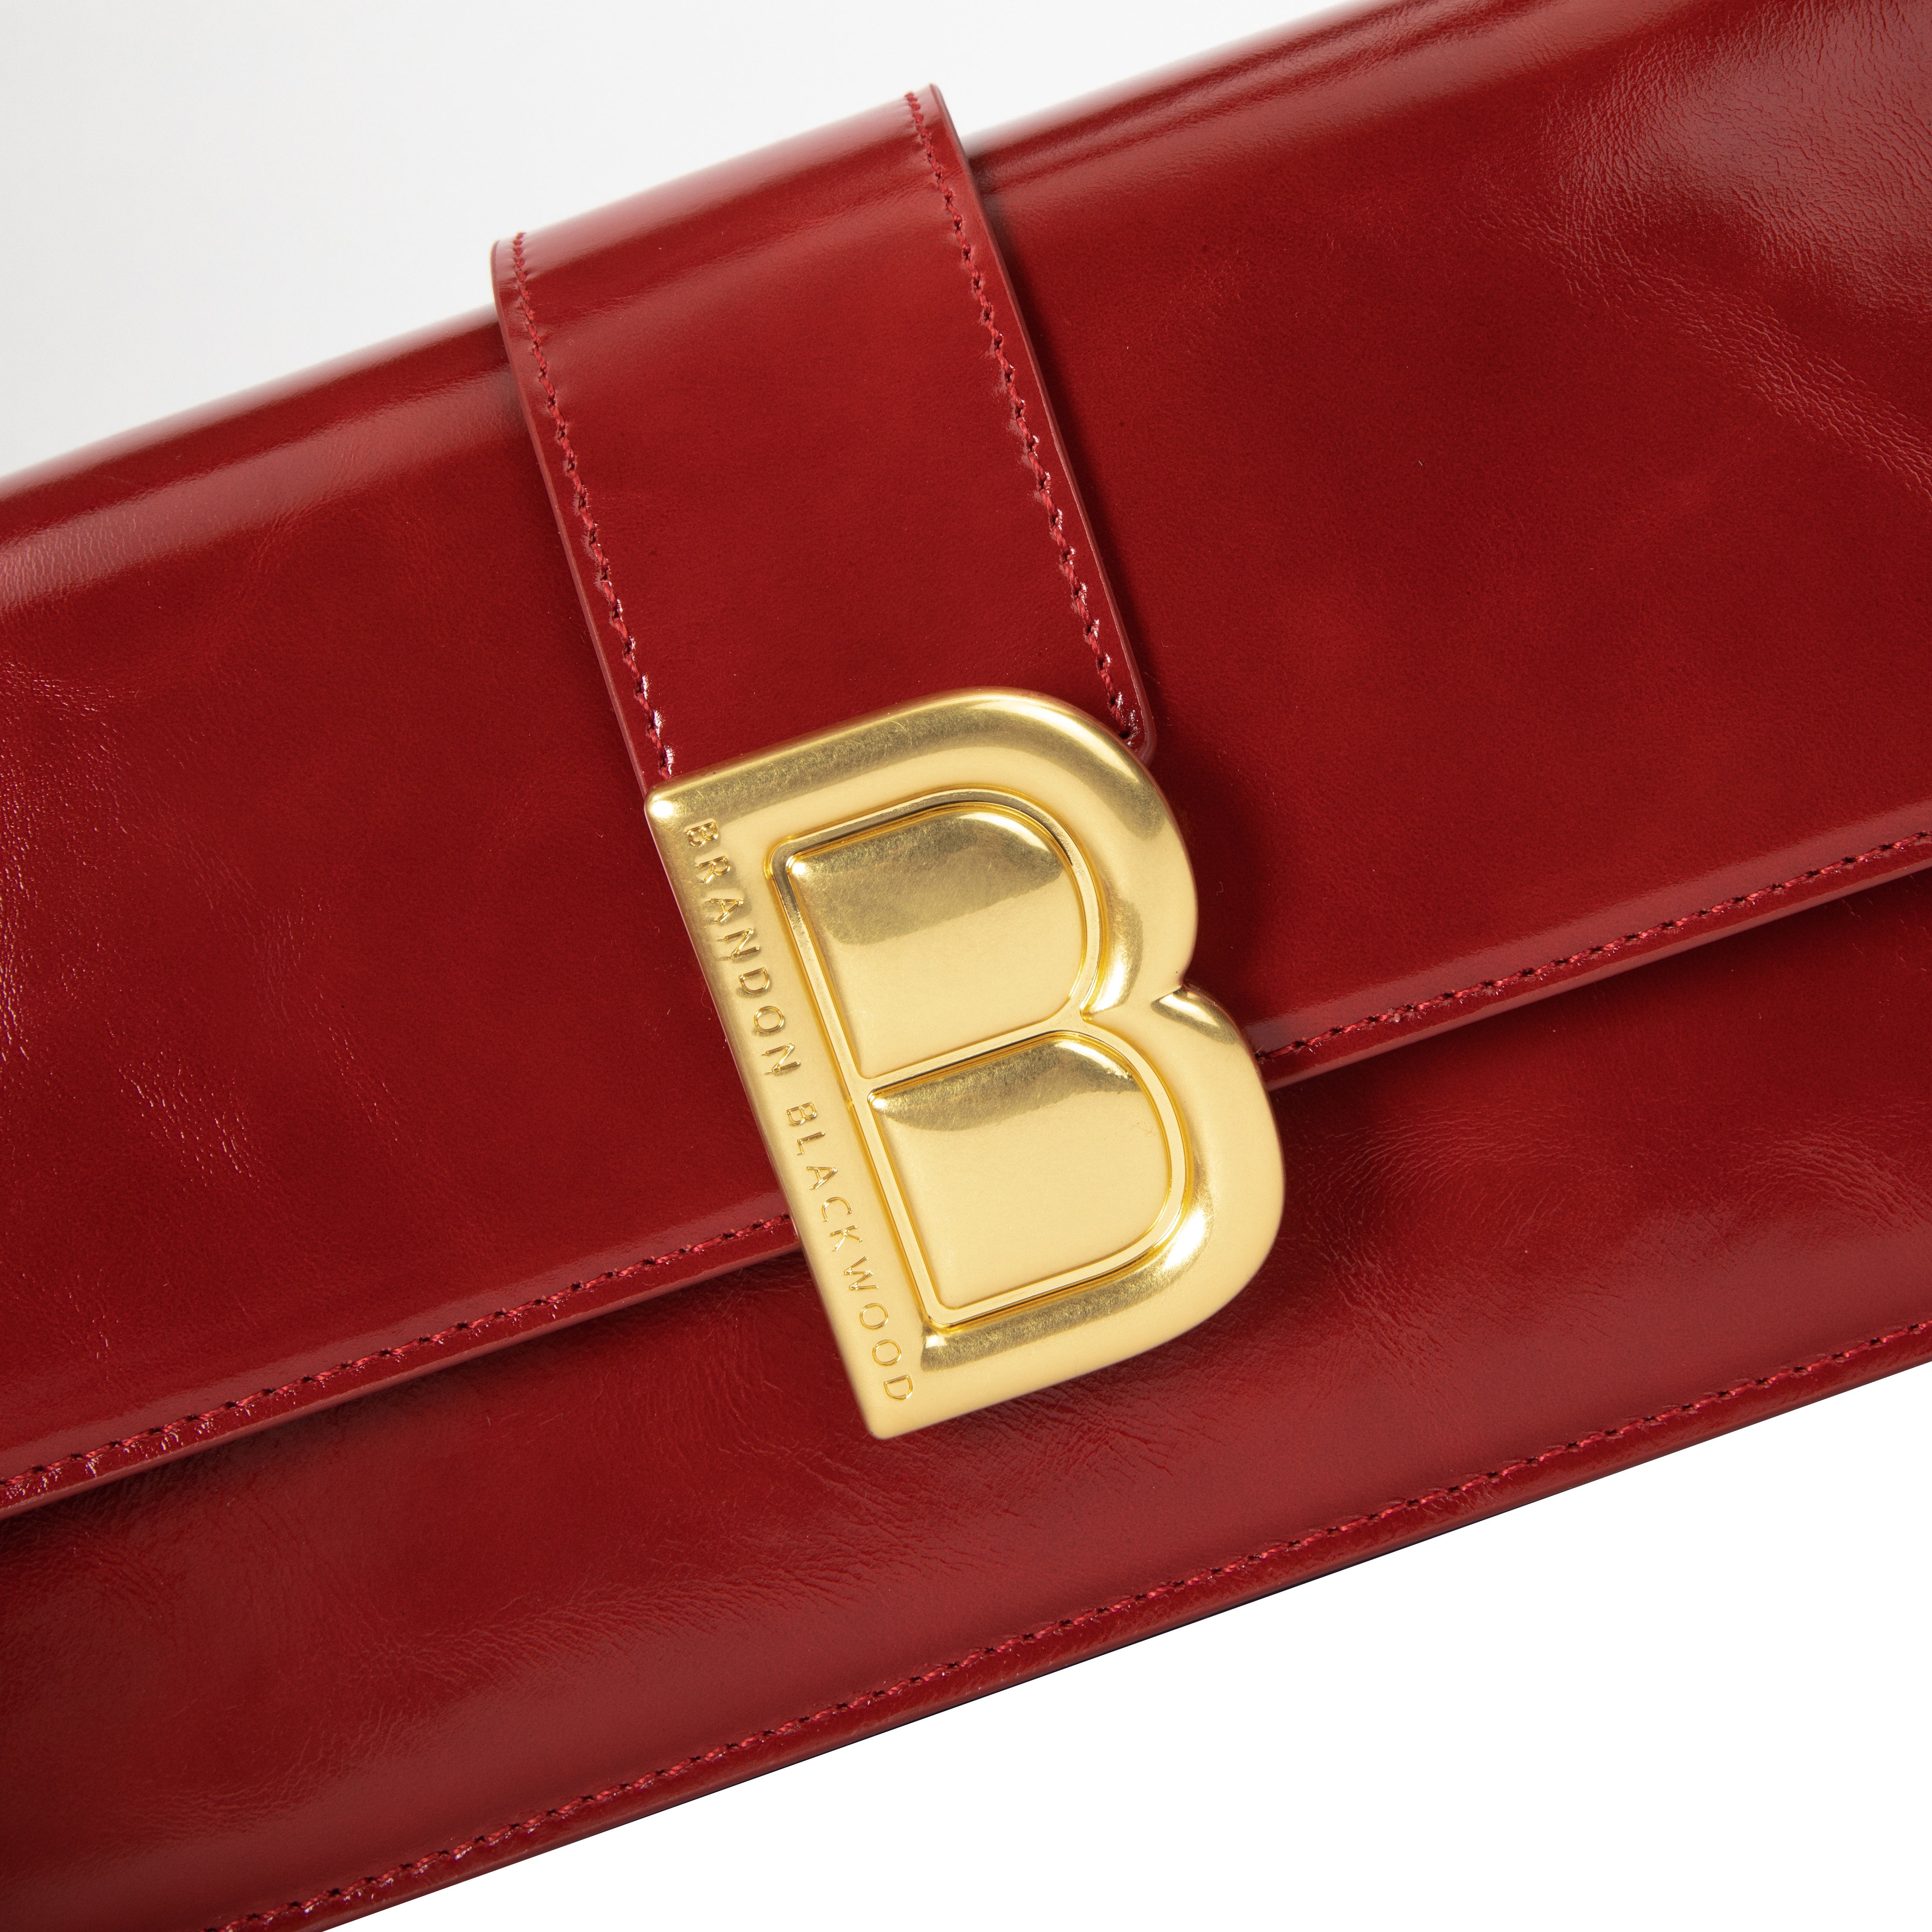 Brandon Blackwood New York - Nia Bag - Red Oil Leather